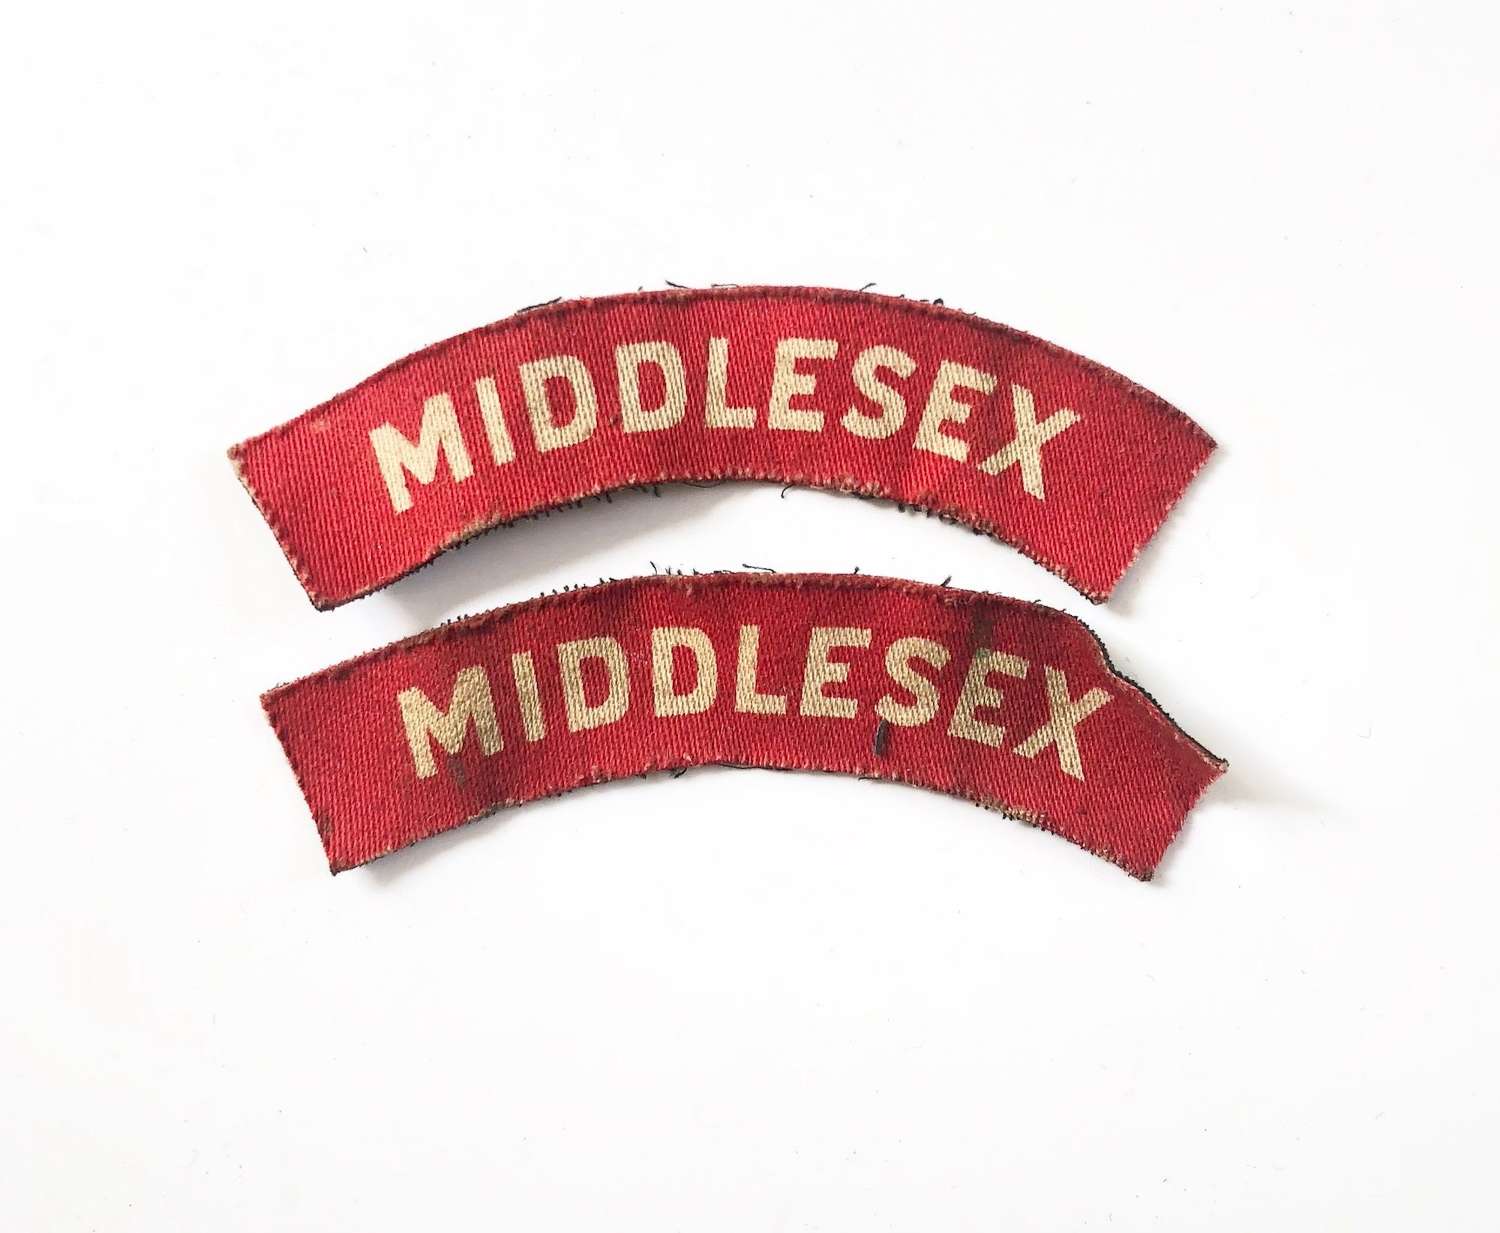 WW2 Middlesex Regiment Printed Cloth Shoulder Titles.